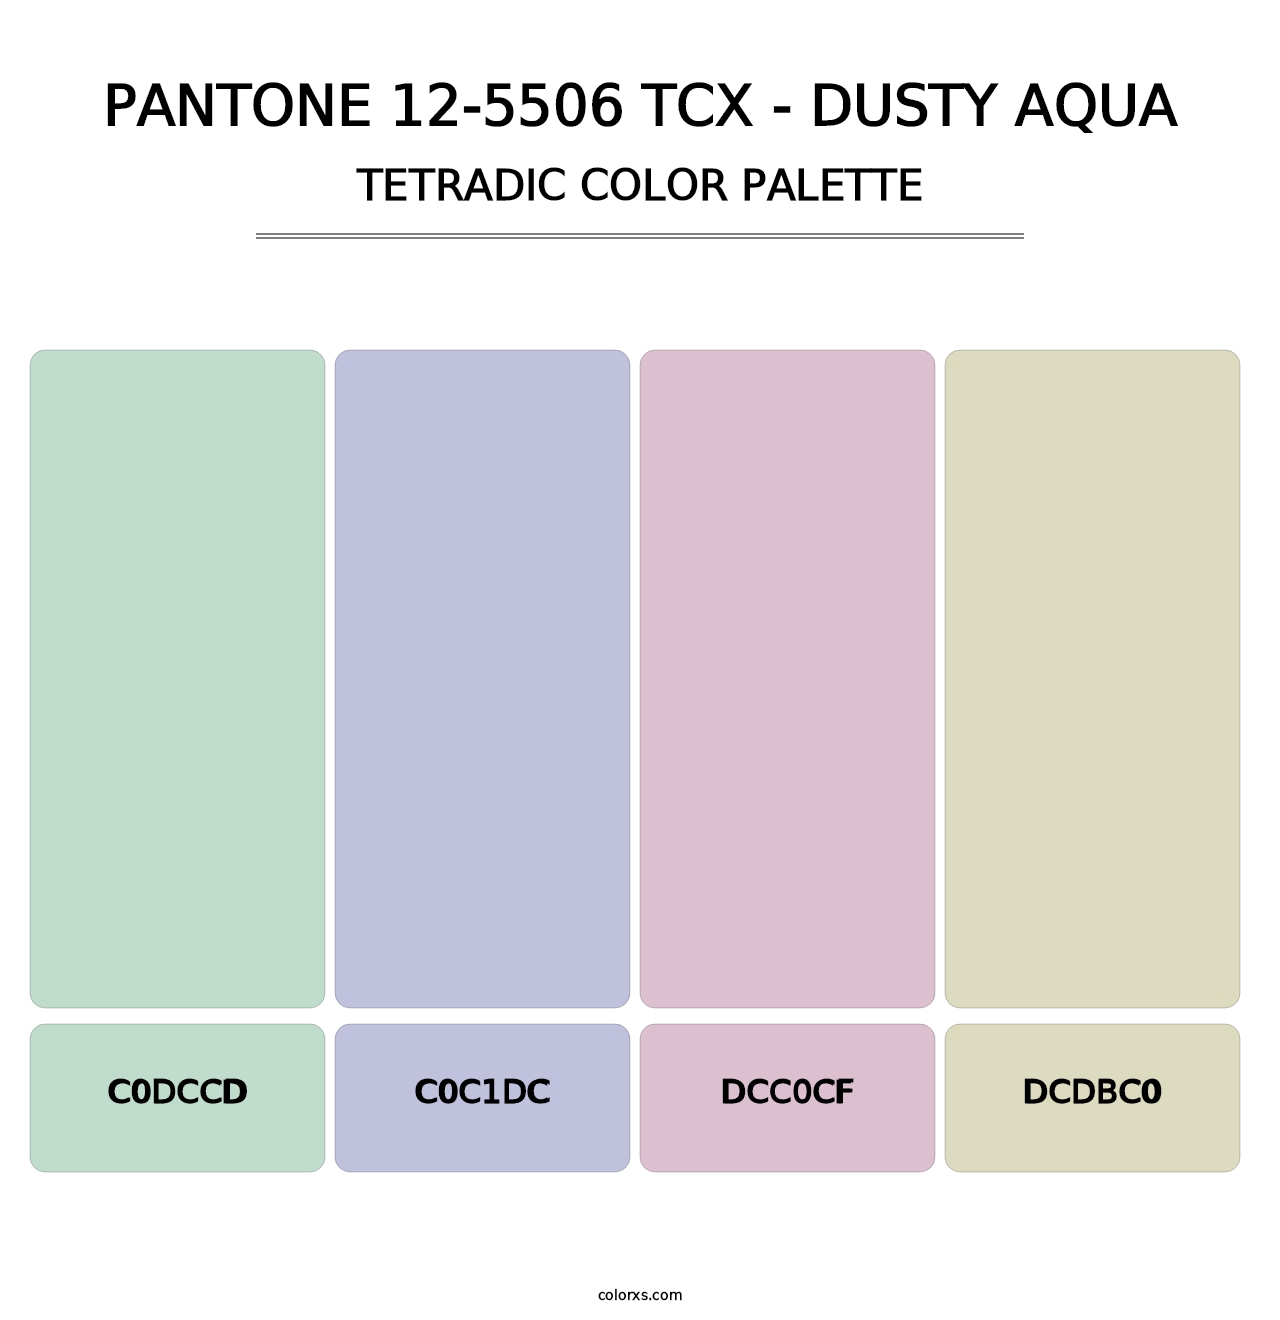 PANTONE 12-5506 TCX - Dusty Aqua - Tetradic Color Palette